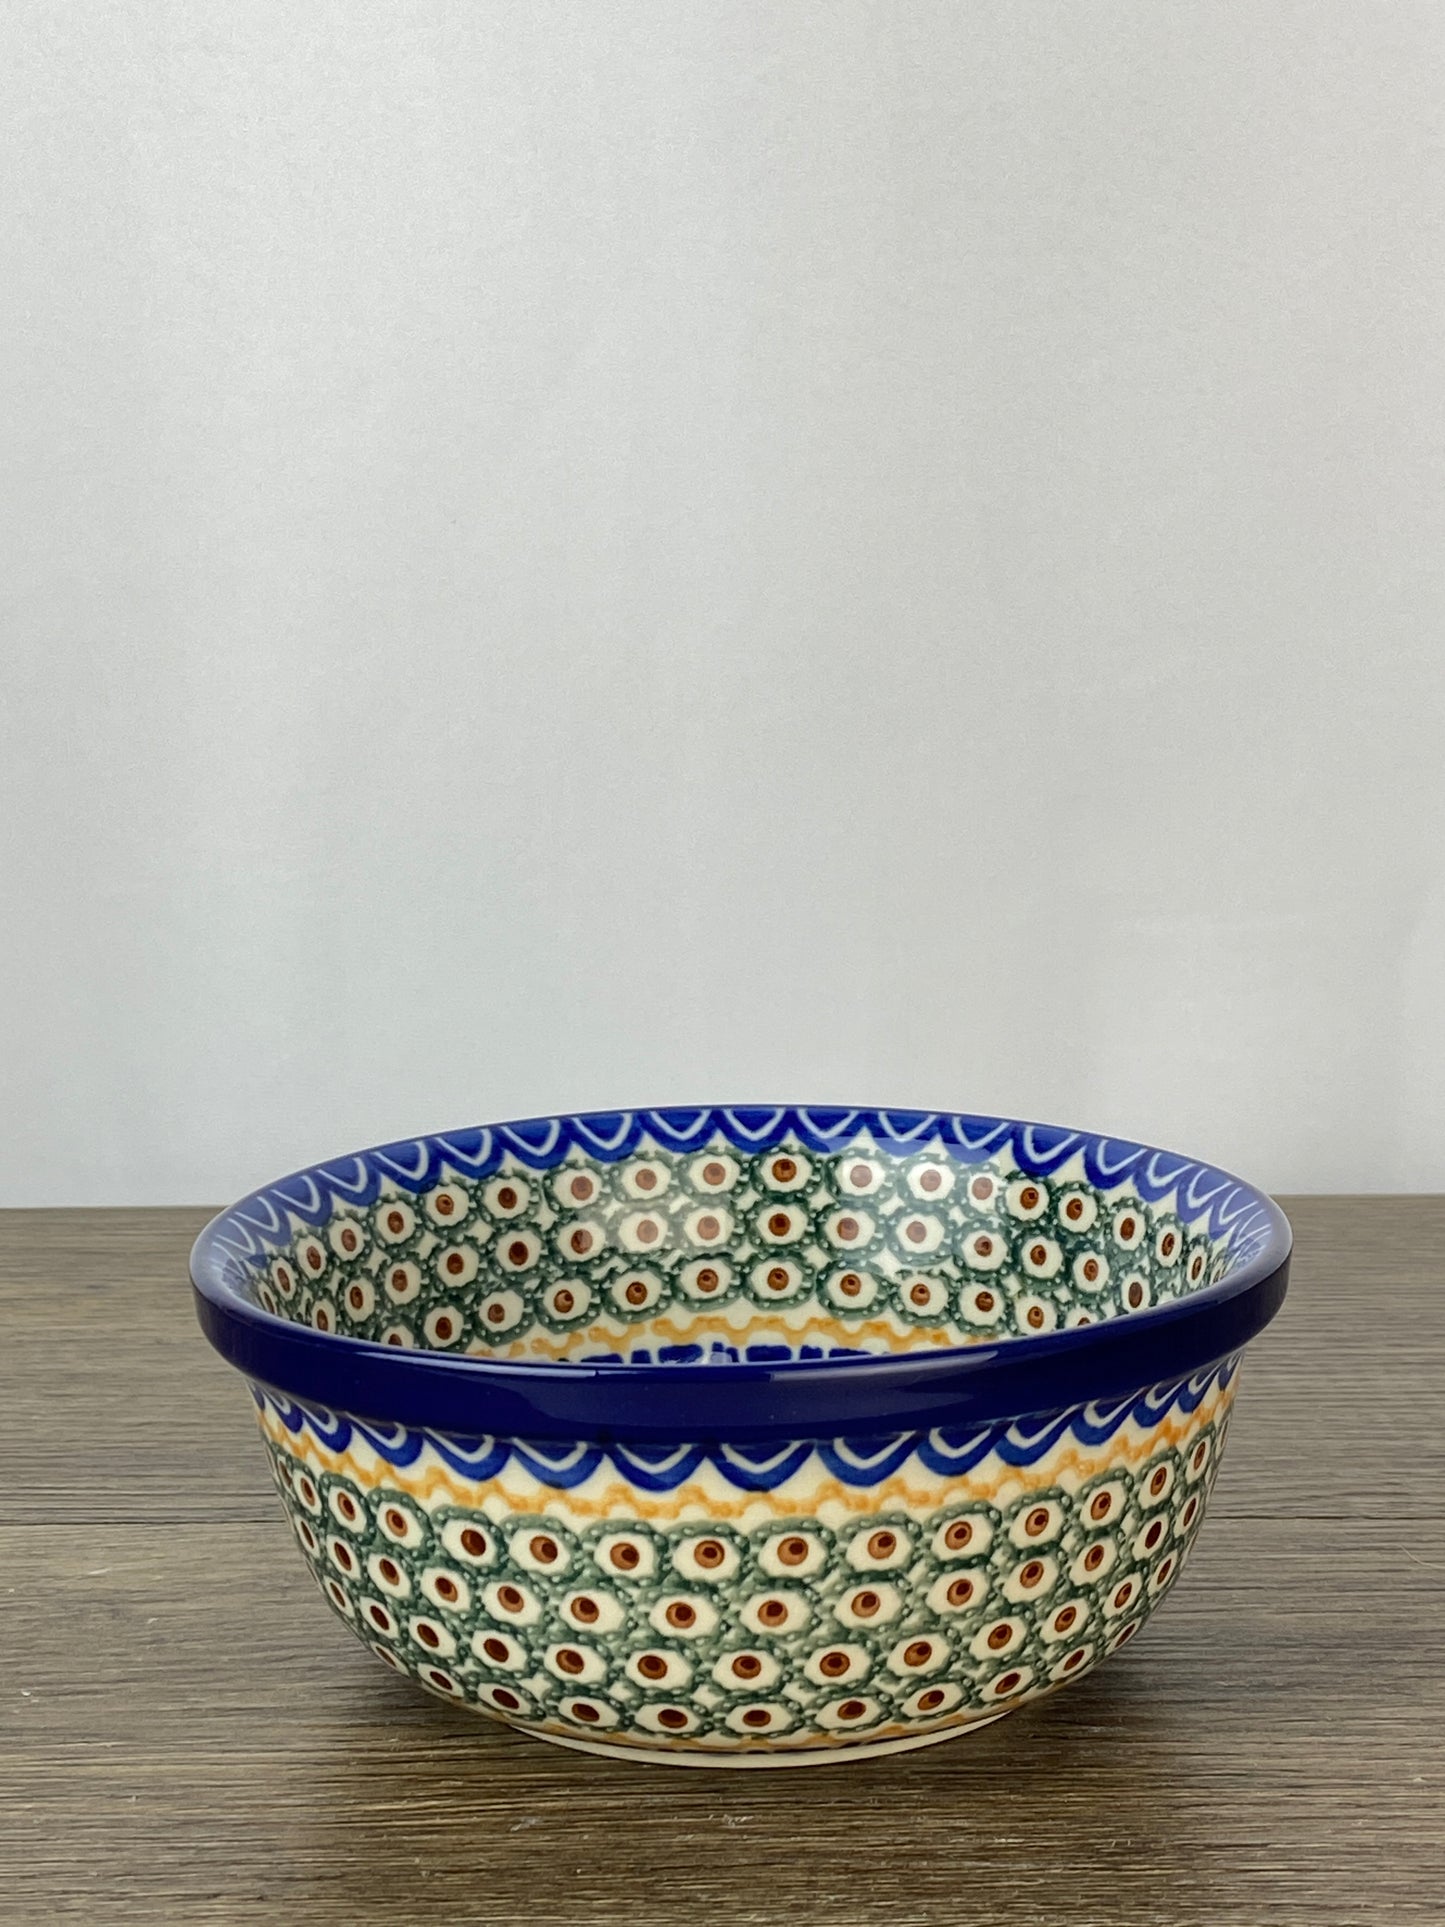 SALE Unikat Cereal Bowl - Shape 209 - Pattern U740